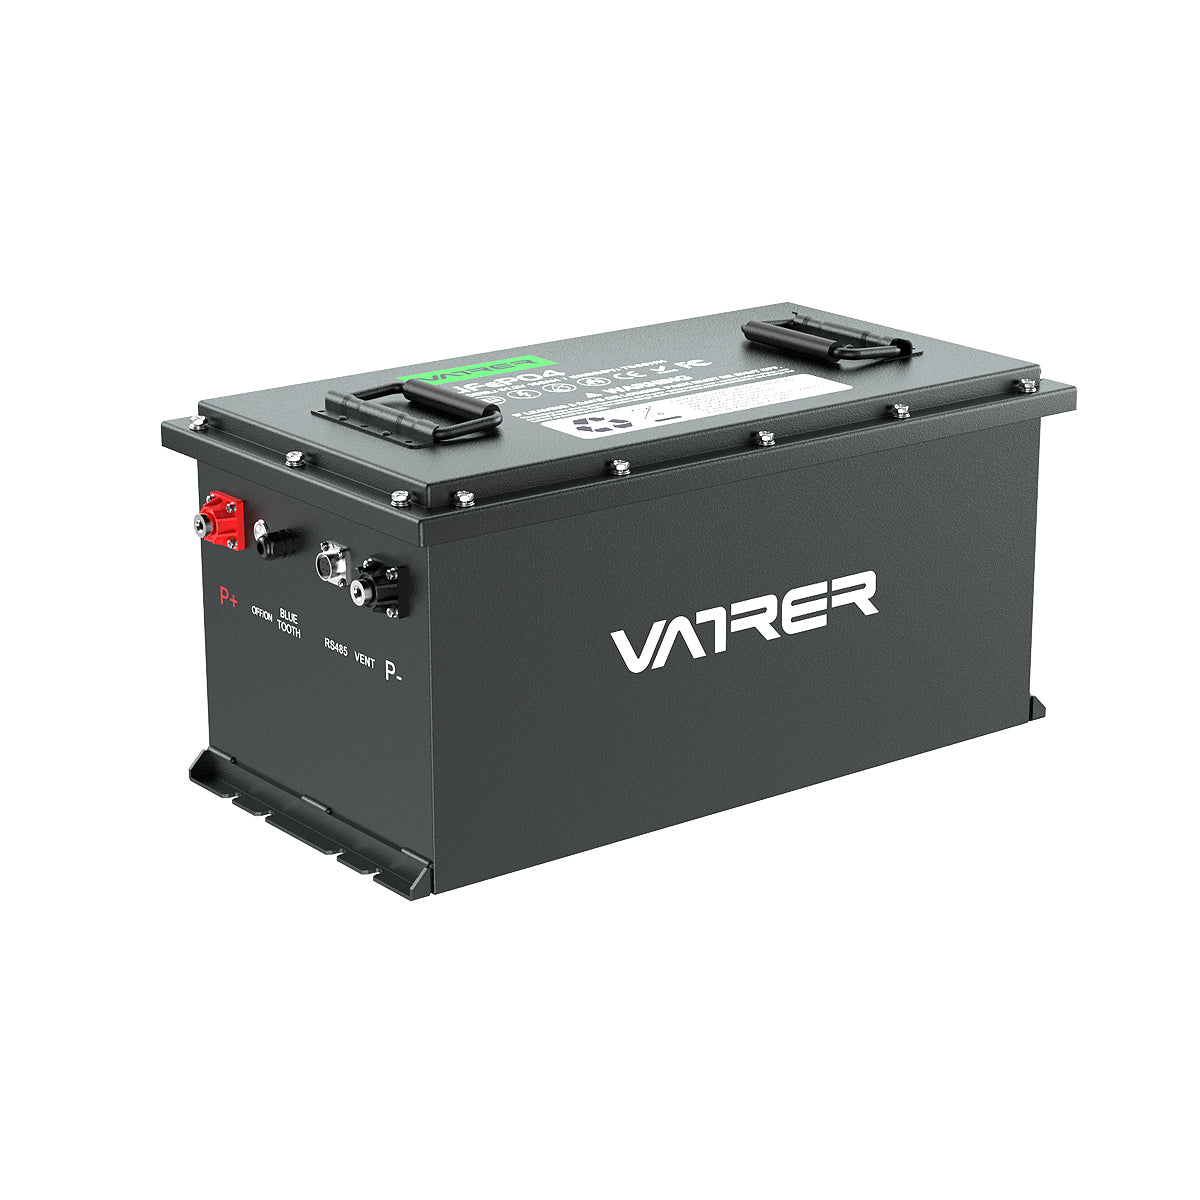 Vatler 48V 150Ah 大容量リチウムゴルフカートバッテリー、200A BMS、7580Wh、最大 10.24kW 出力